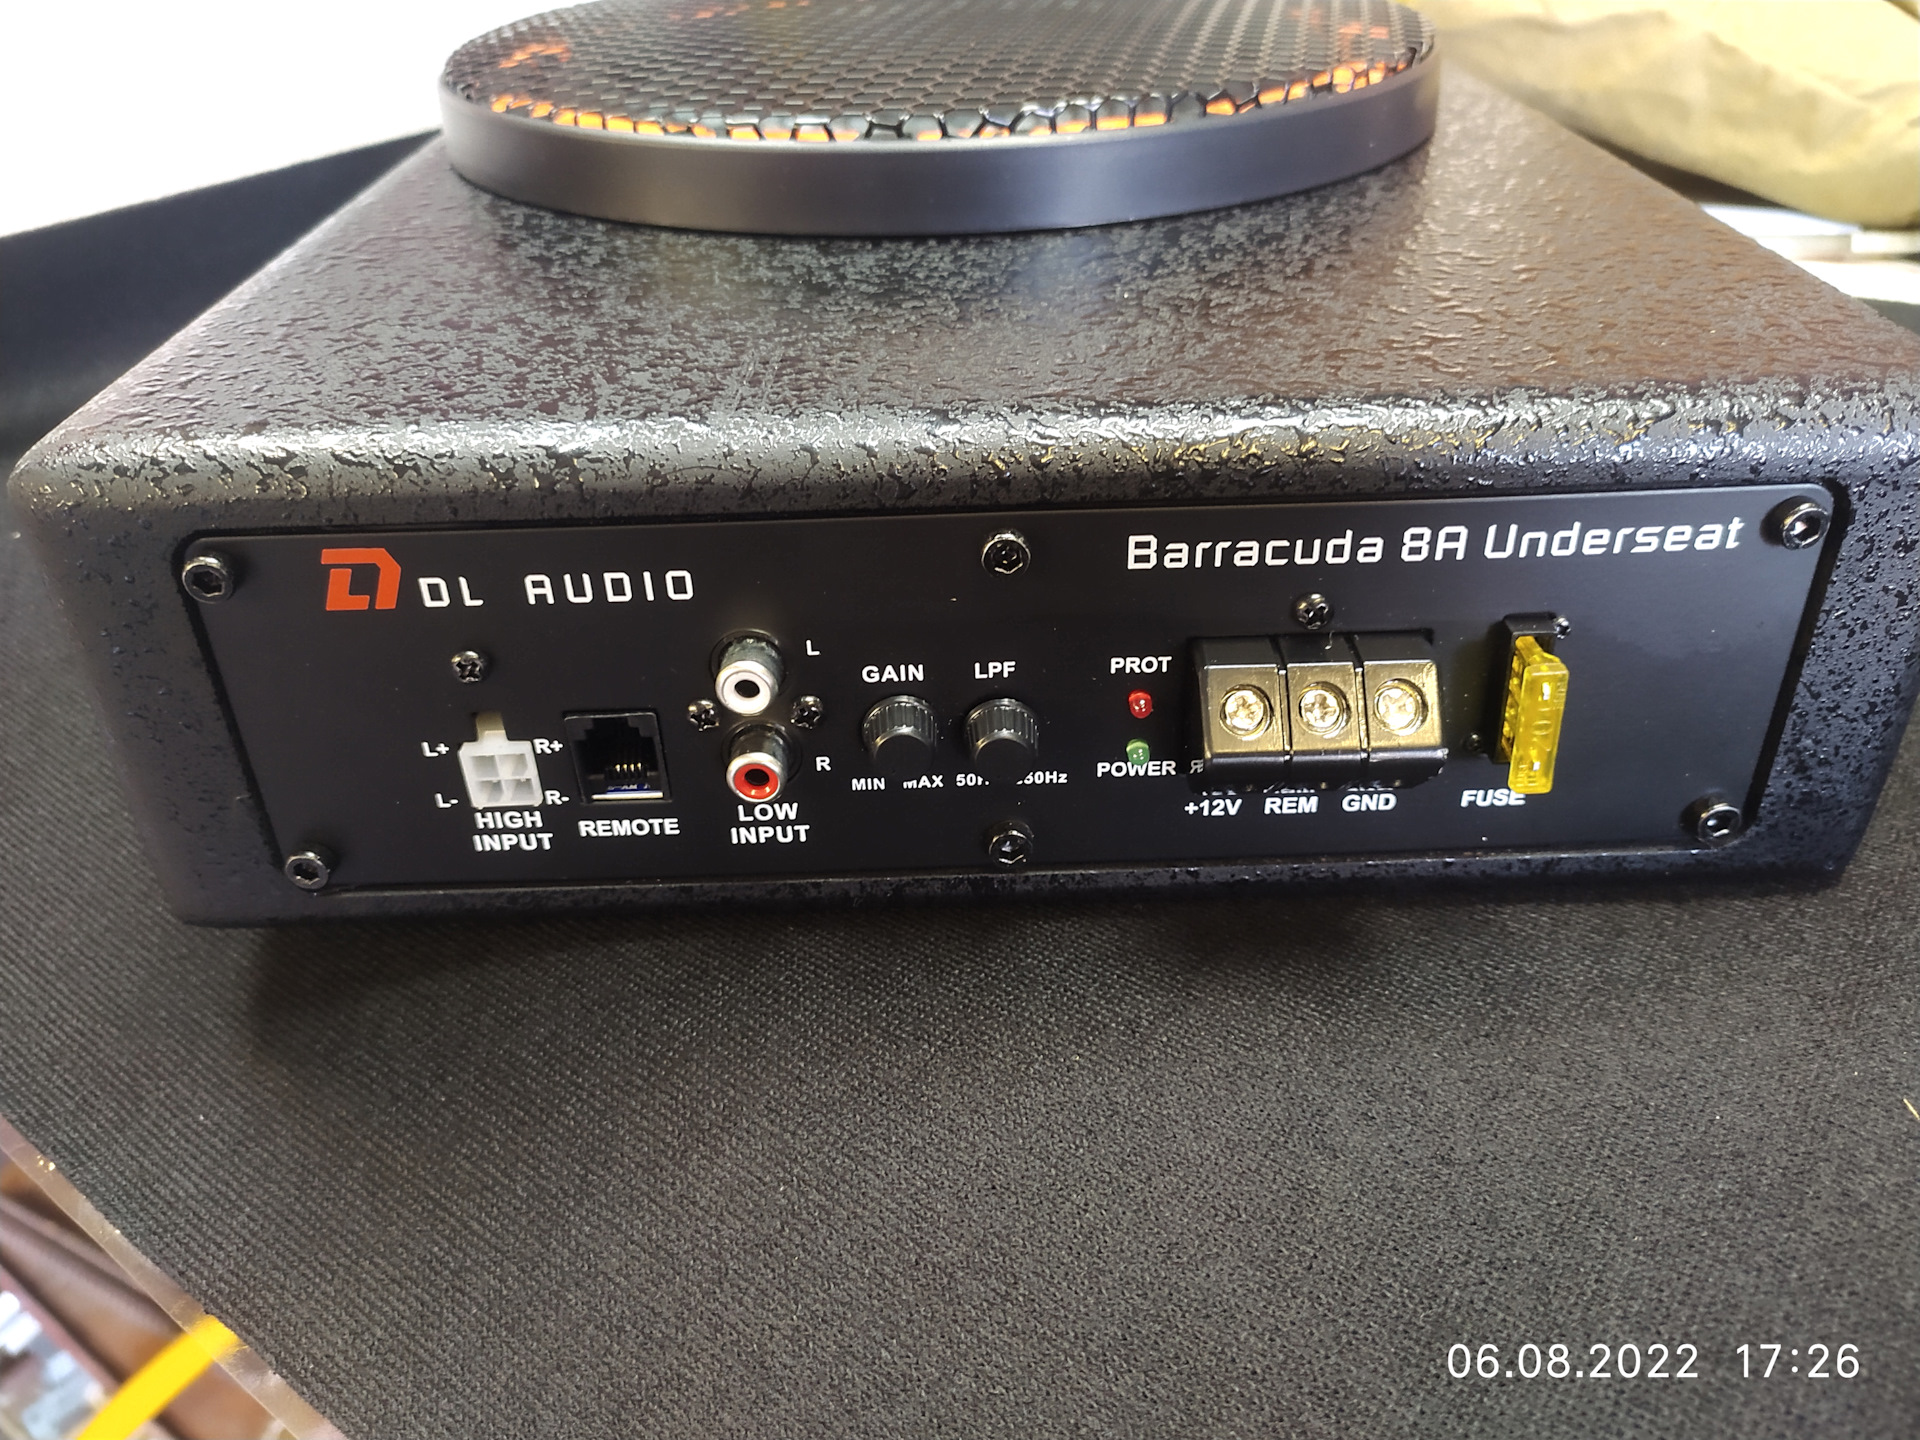 Audio barracuda 8 flat. DL Audio Barracuda 8a. Сабвуфер DL Barracuda 10”. Активный сабвуфер DL Audio Barracuda 8a Underseat. DJ Audio Barracuda 8.